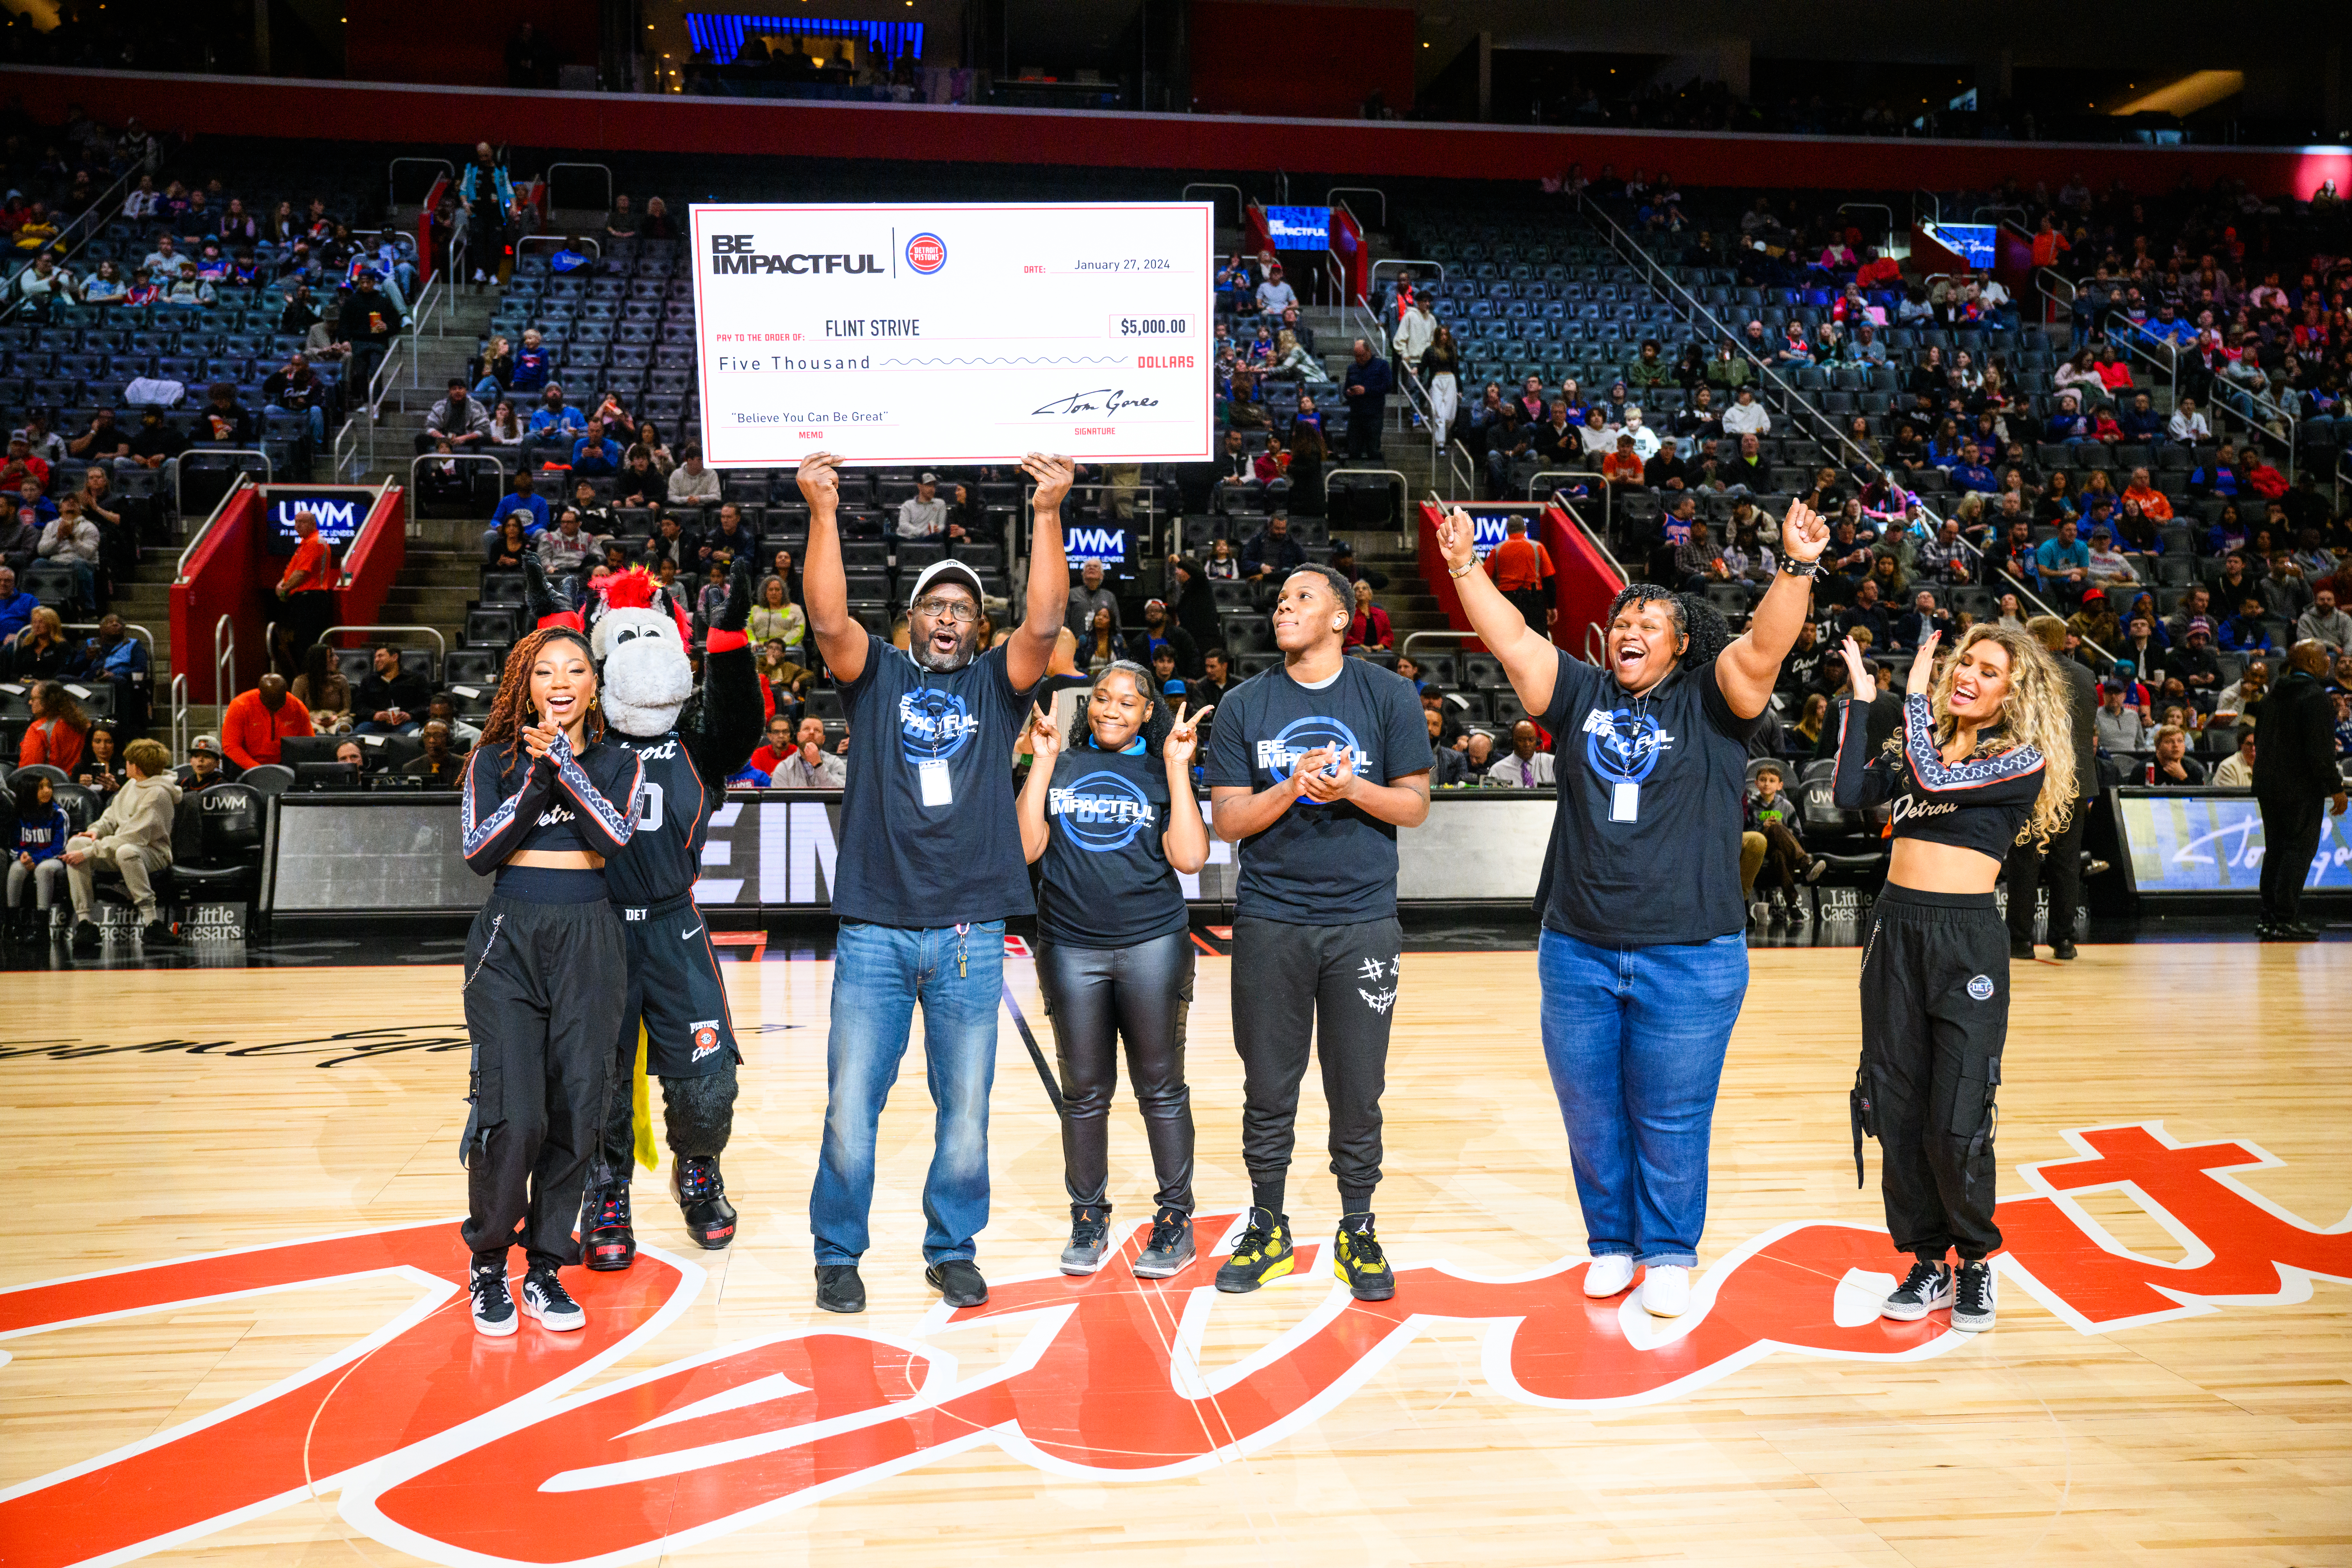 Detroit Pistons owner Tom Gores continues providing game-night surprises for Flint children through ‘Be Impactful’ program